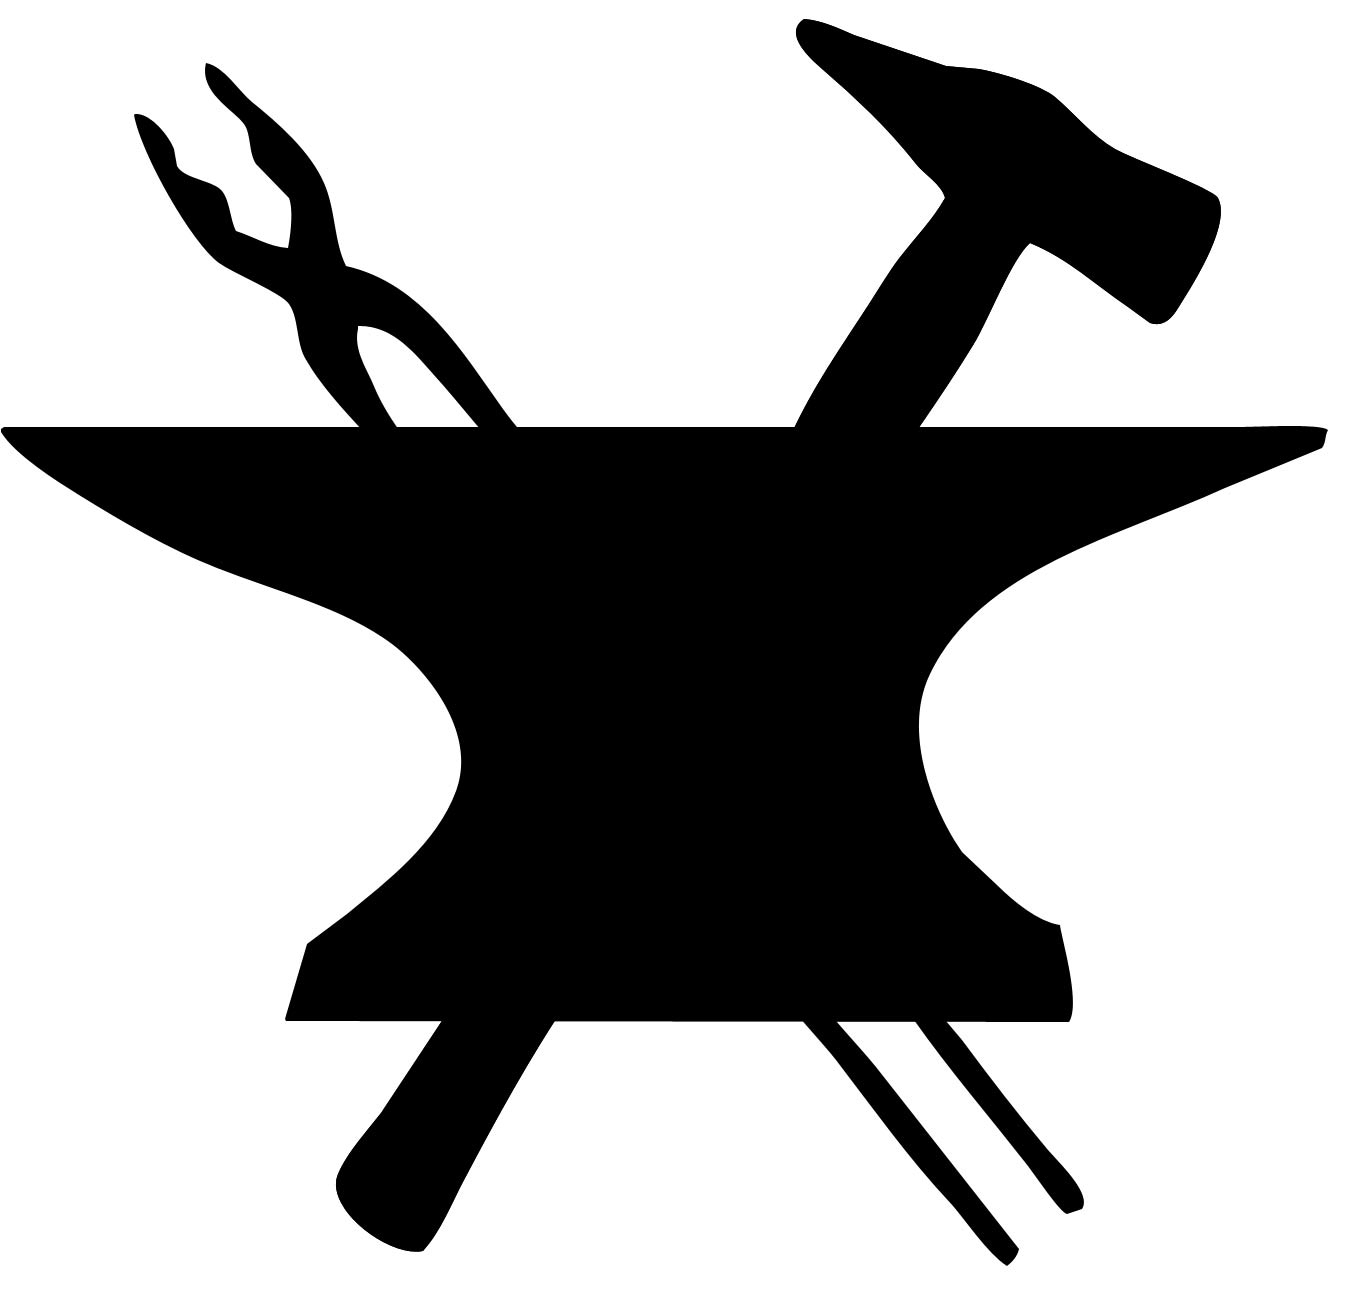 Blacksmith tools clipart 